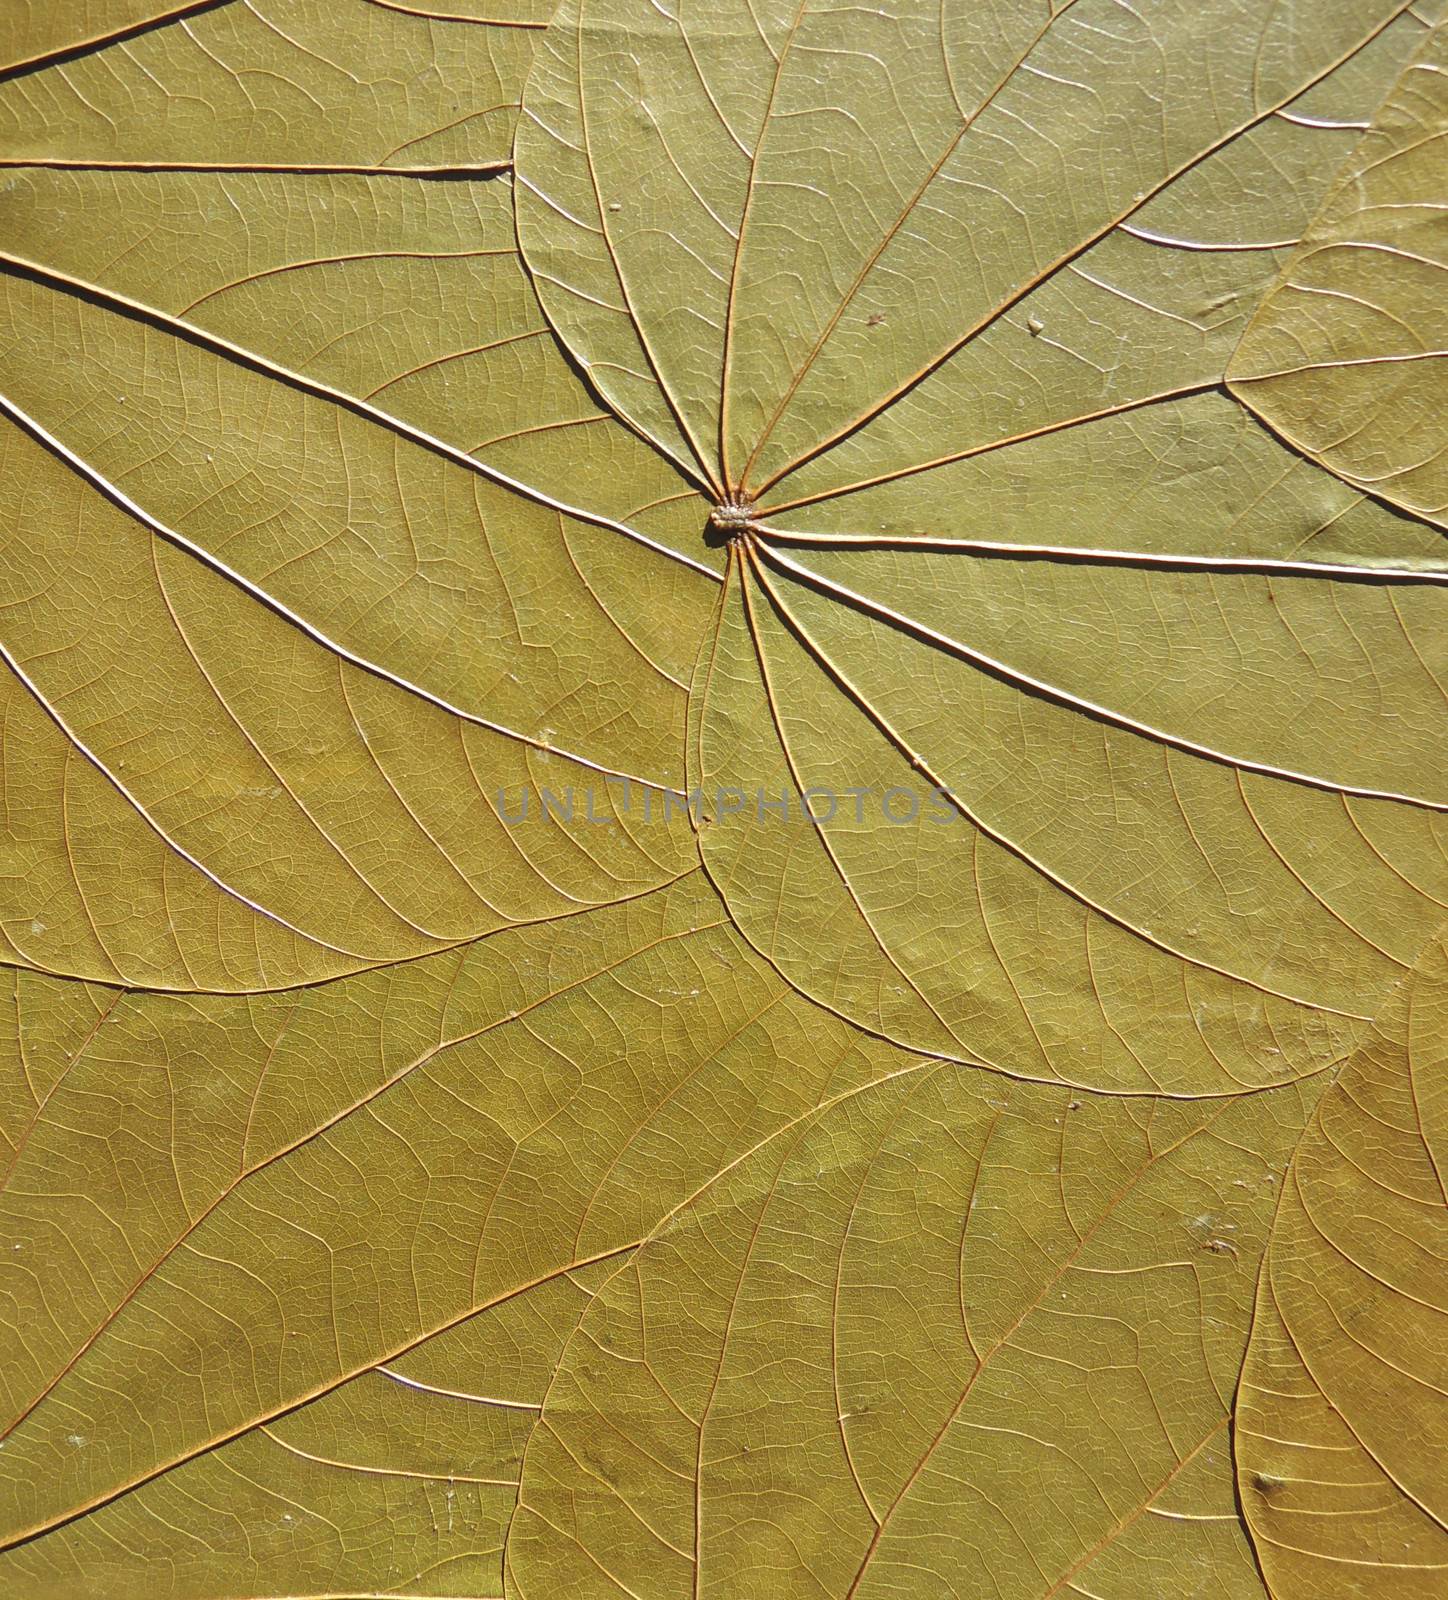 Dry leaf macro